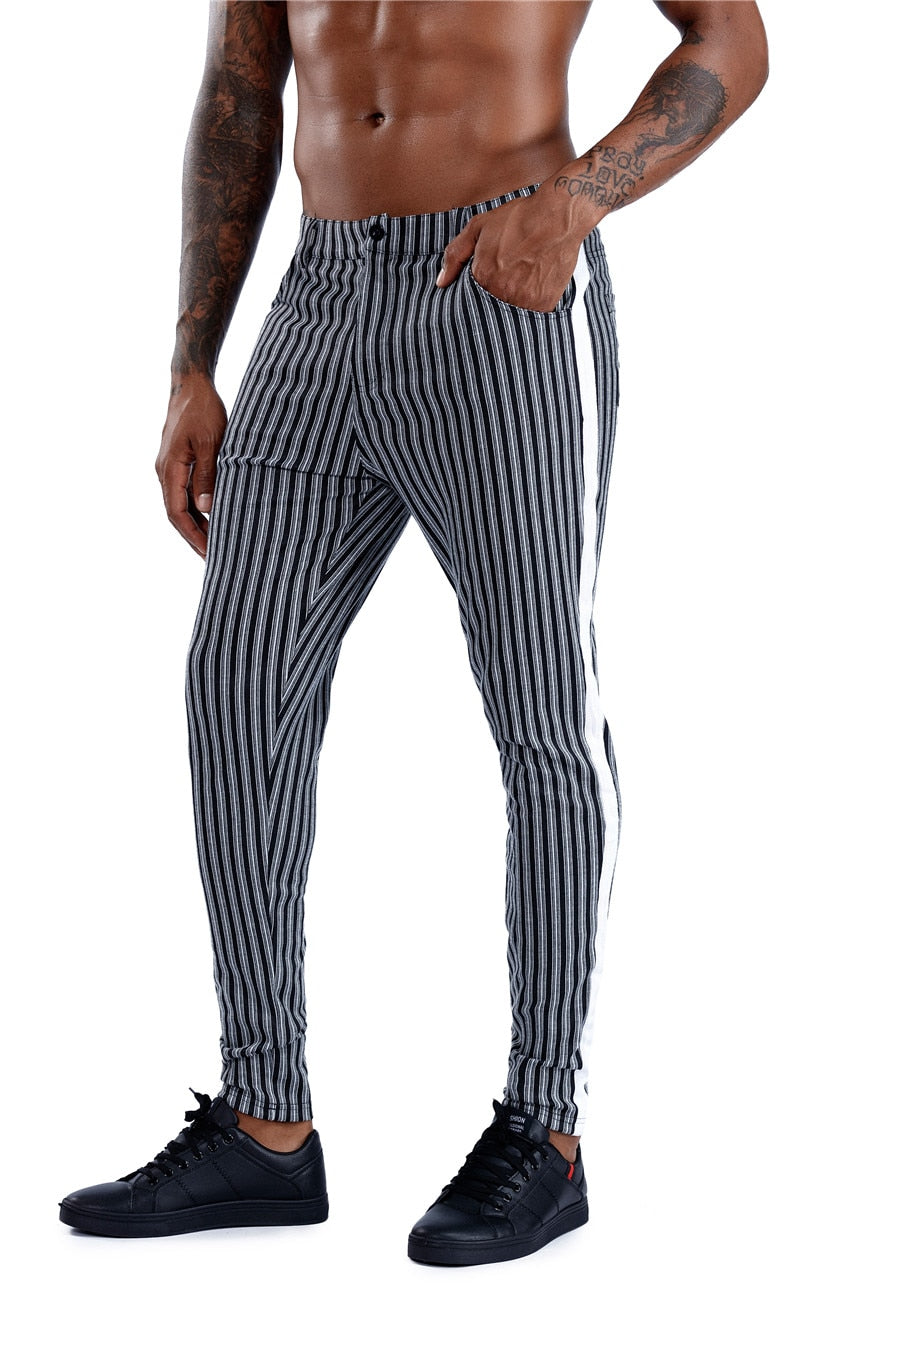 Brand Plaid Pants Men Elastic Male Skinny Trousers Bottom Tight Male Pant Streetwear Sweatpants Casual Joggers Men Pants - TRIPLE AAA Fashion Collection